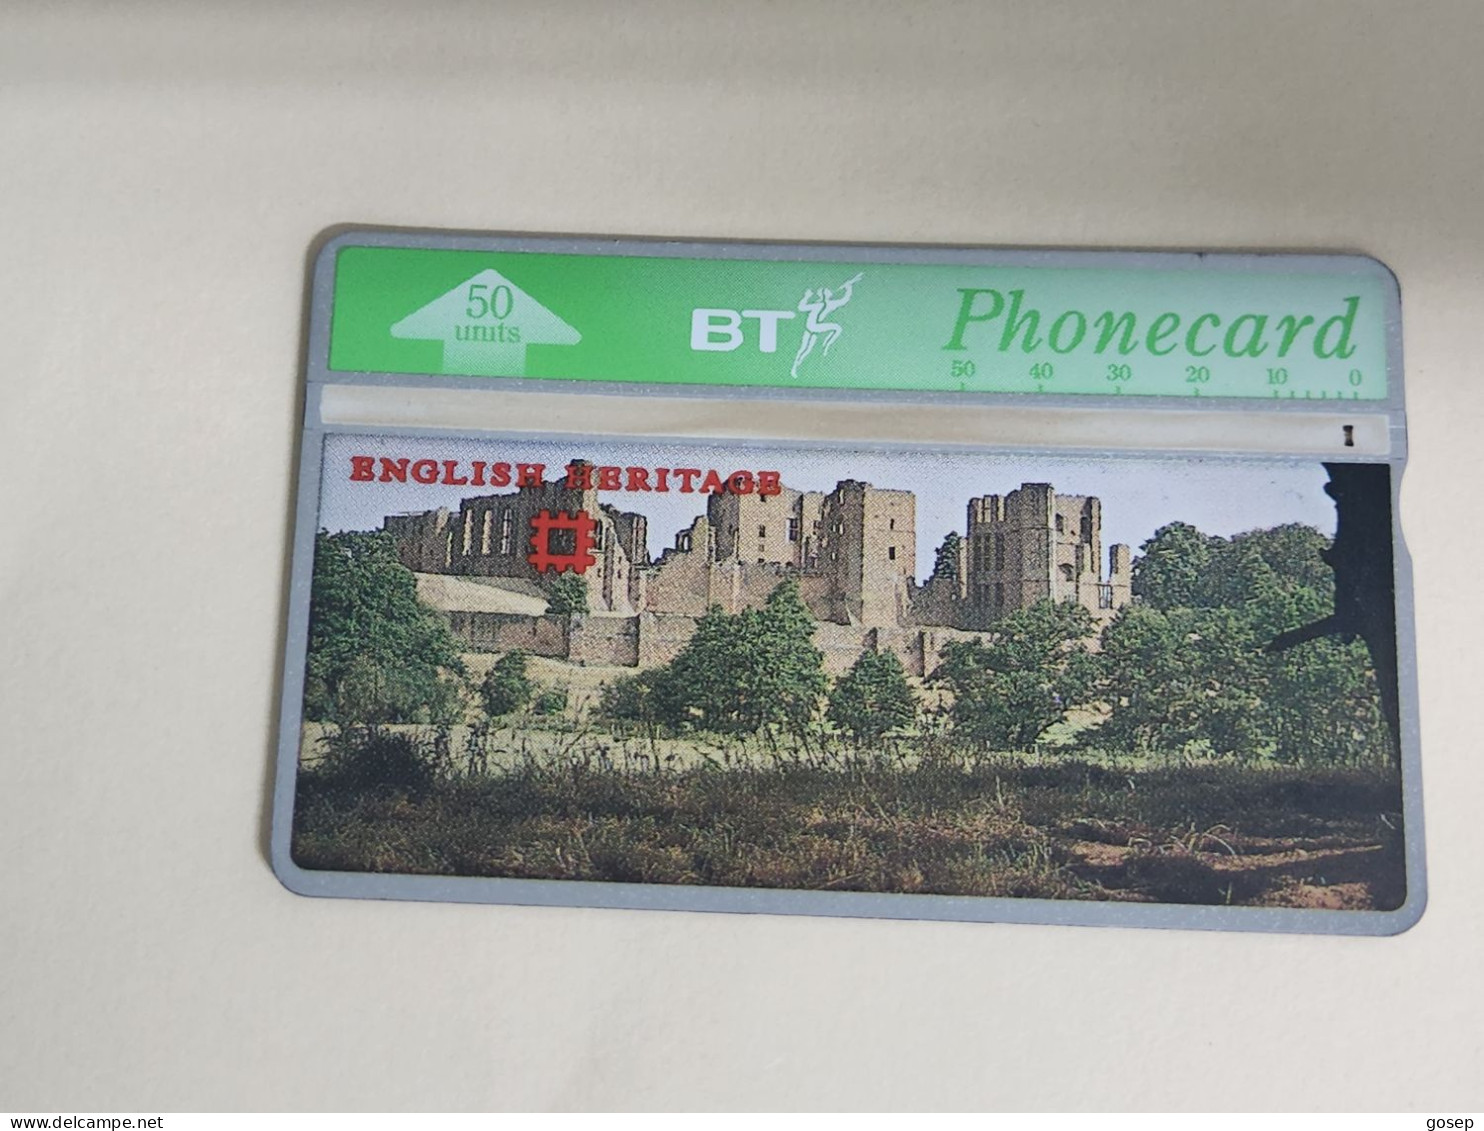 United Kingdom-(BTA108)-HERITAGE-Kenilworth Castle-(182)(50units)(528D70525)price Cataloge3.00£-used+1card Prepiad Free - BT Werbezwecke